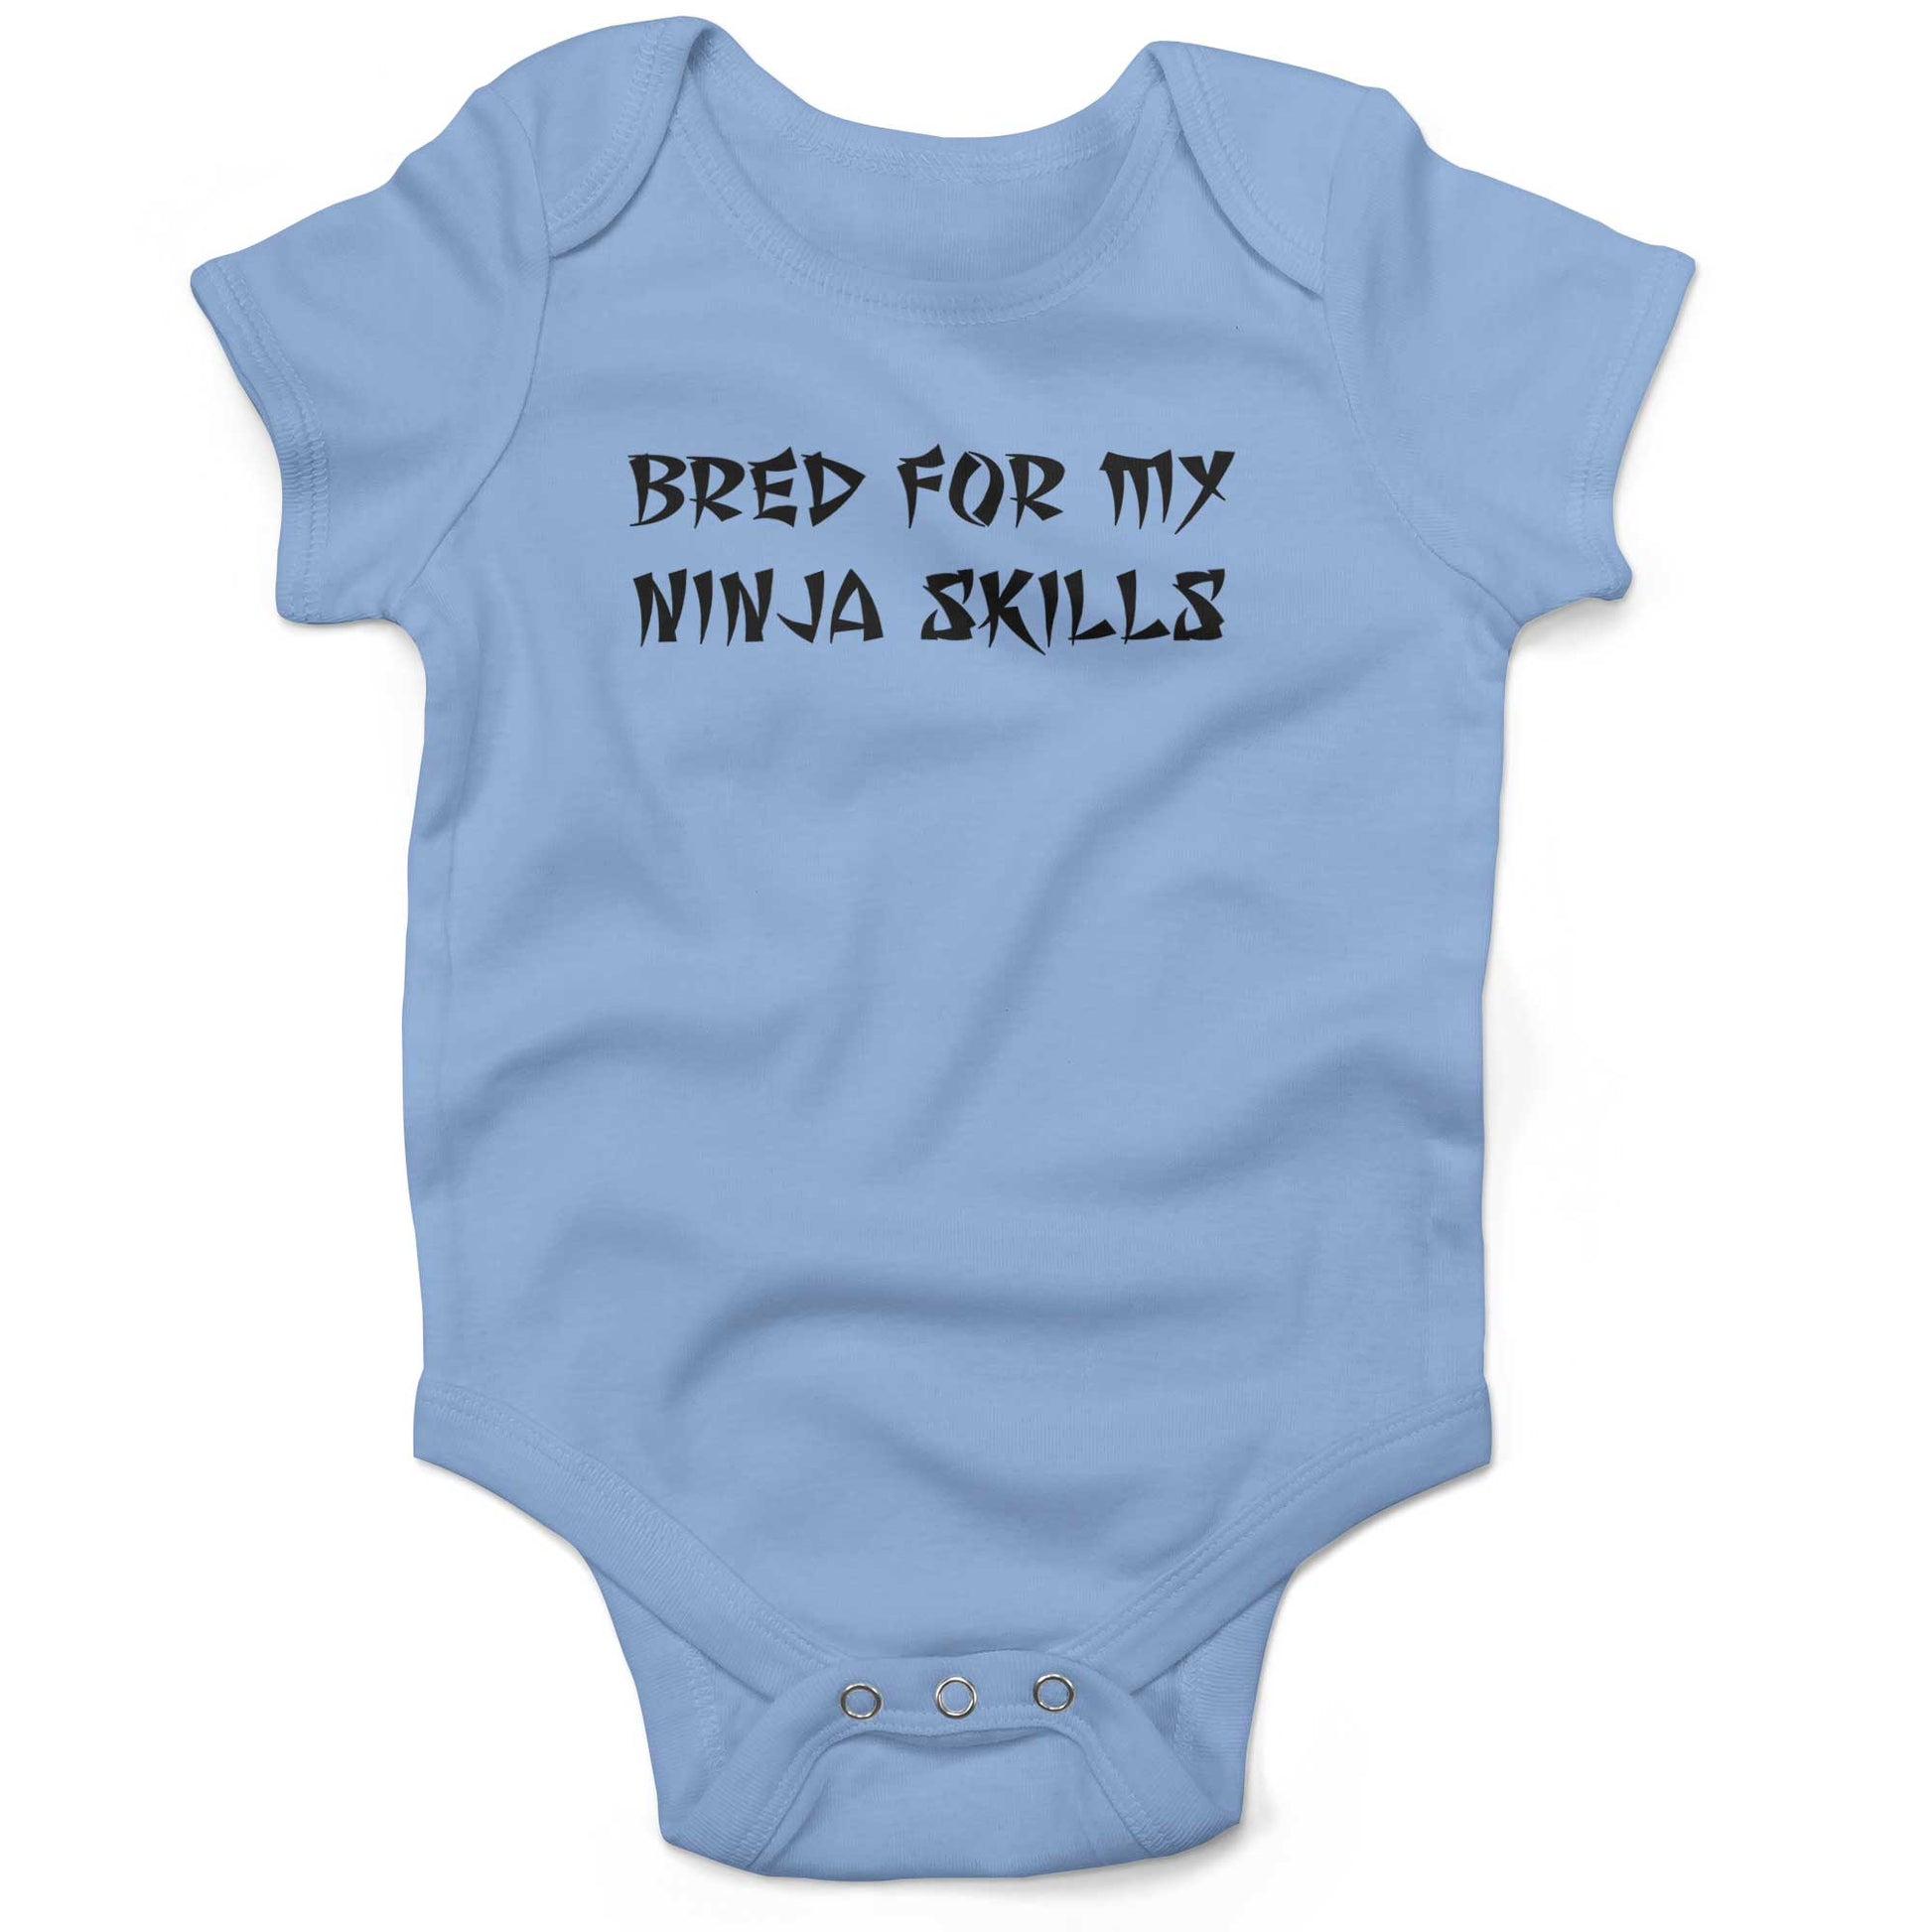 Bred For My Ninja Skills Infant Bodysuit or Raglan Baby Tee-Organic Baby Blue-3-6 months